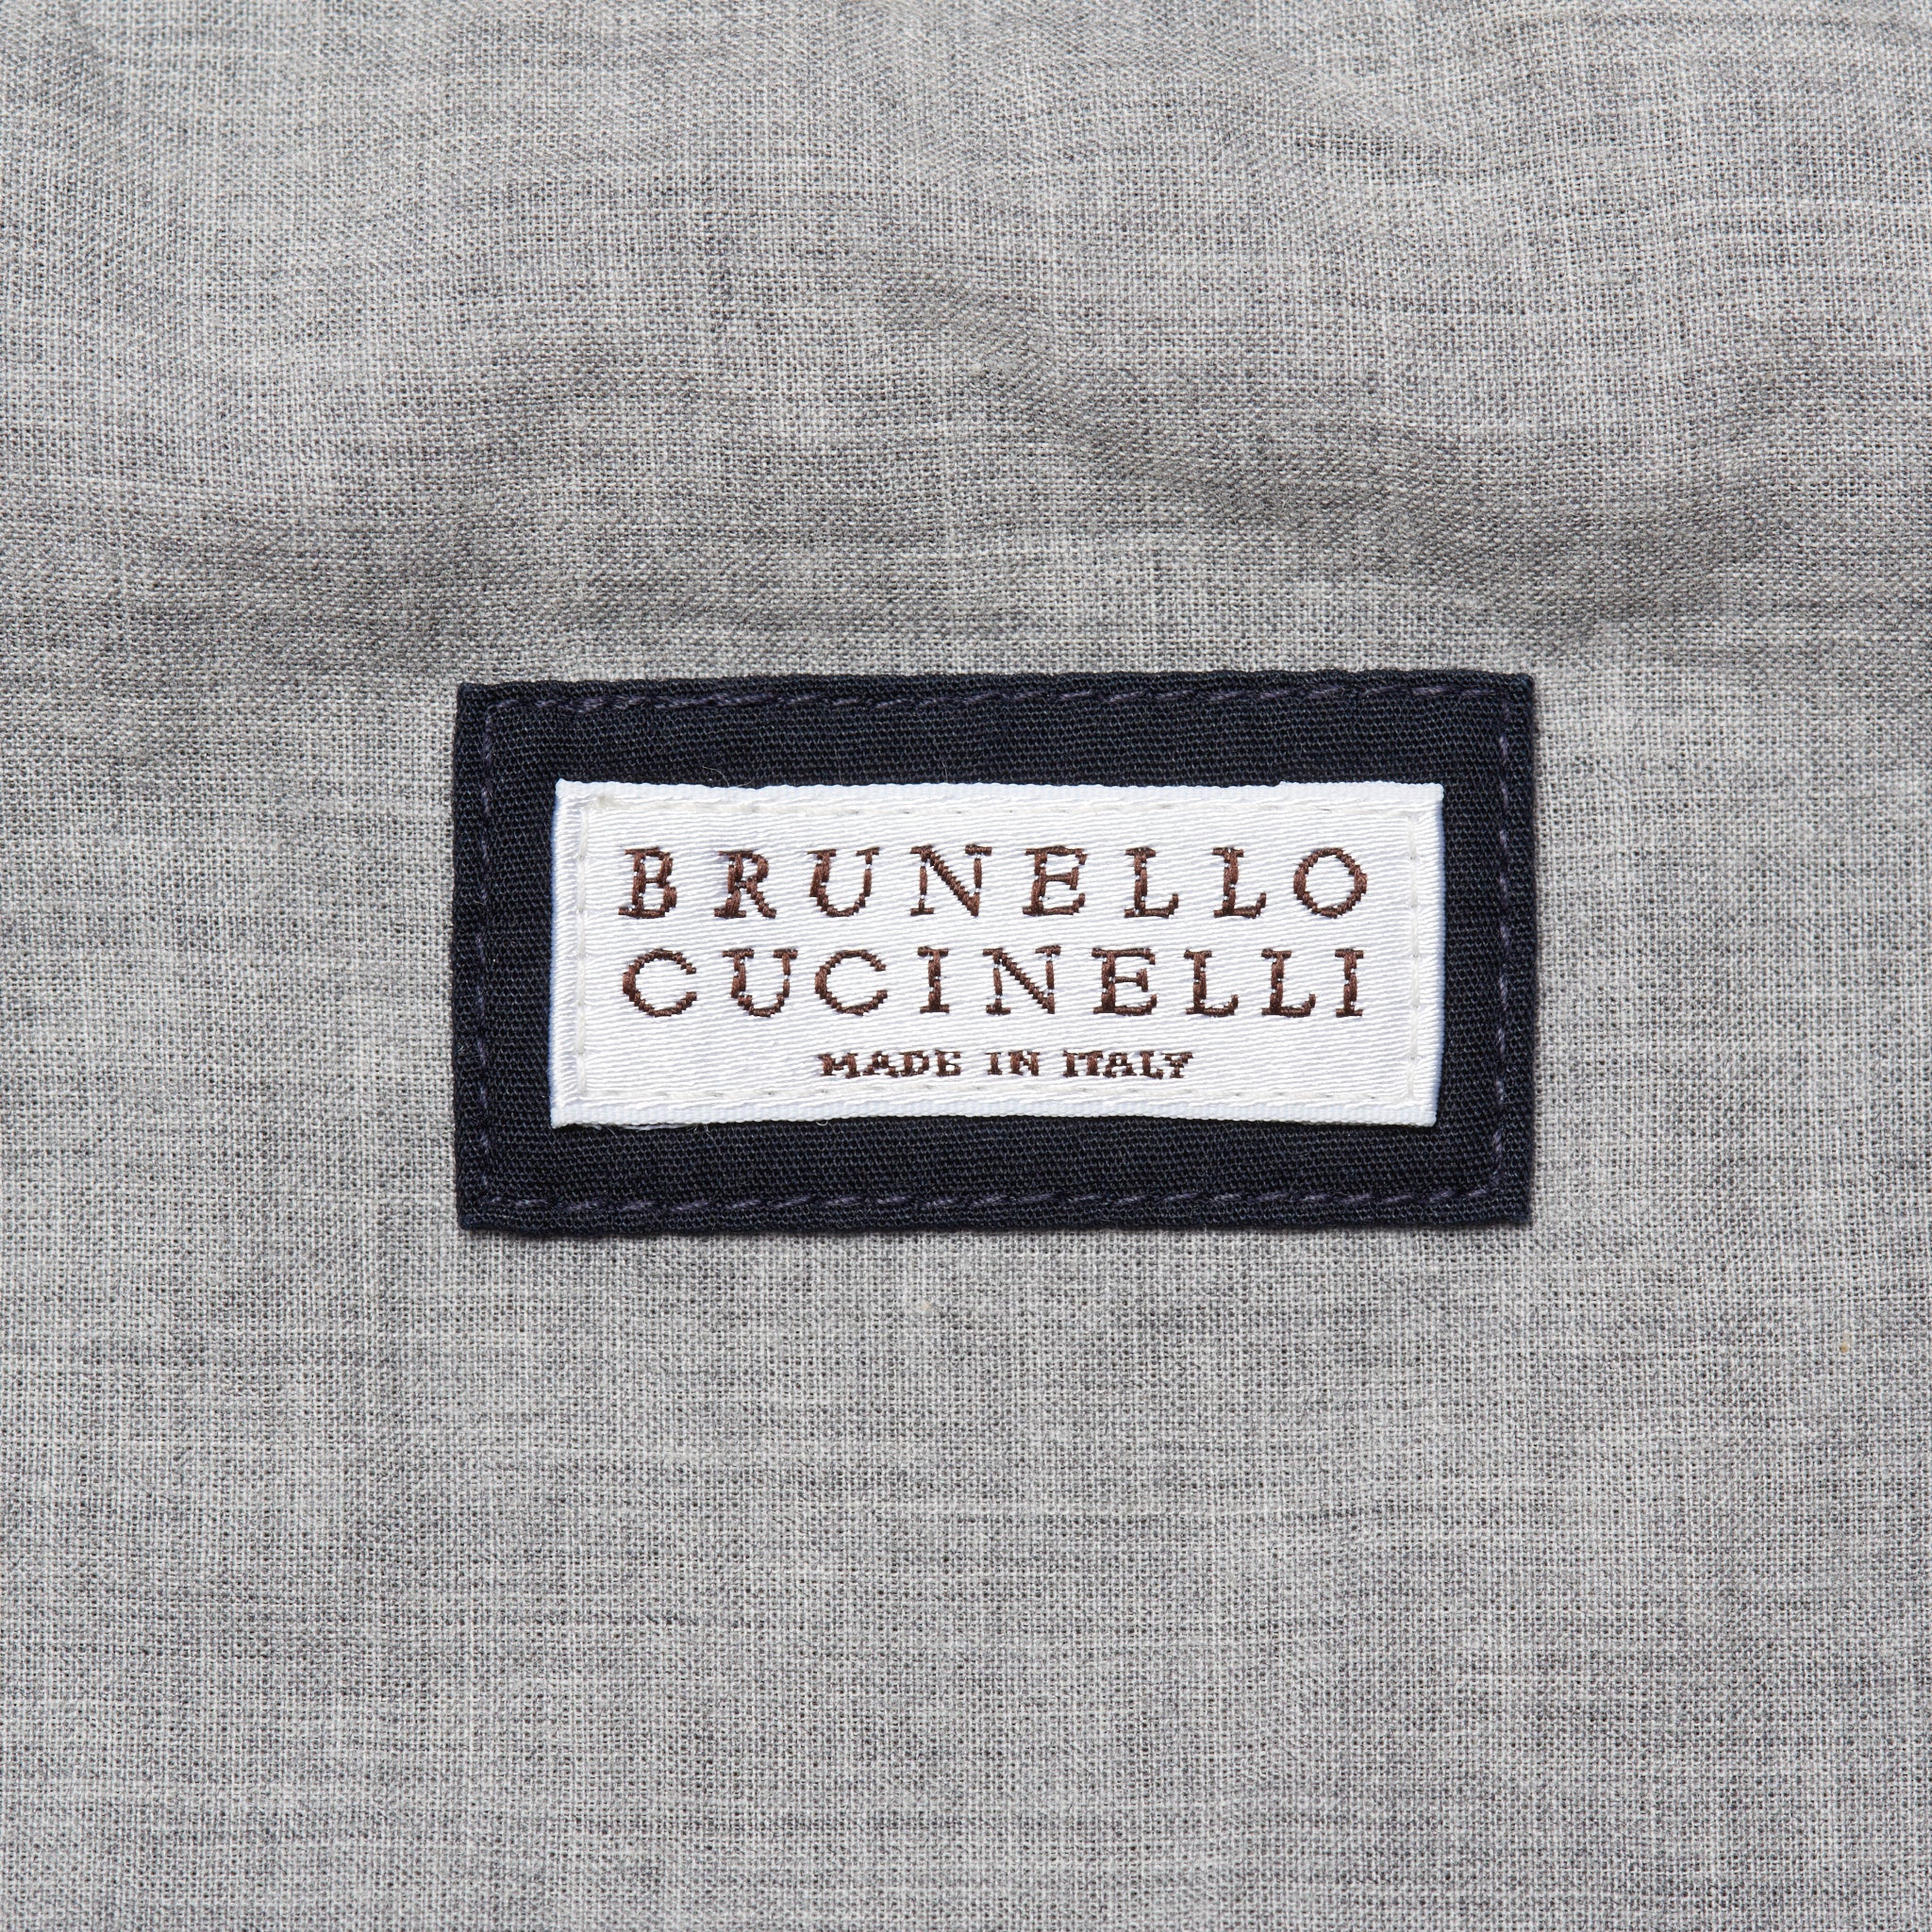 BRUNELLO CUCINELLI Brown Cotton Flight Jacket Blouson Size M